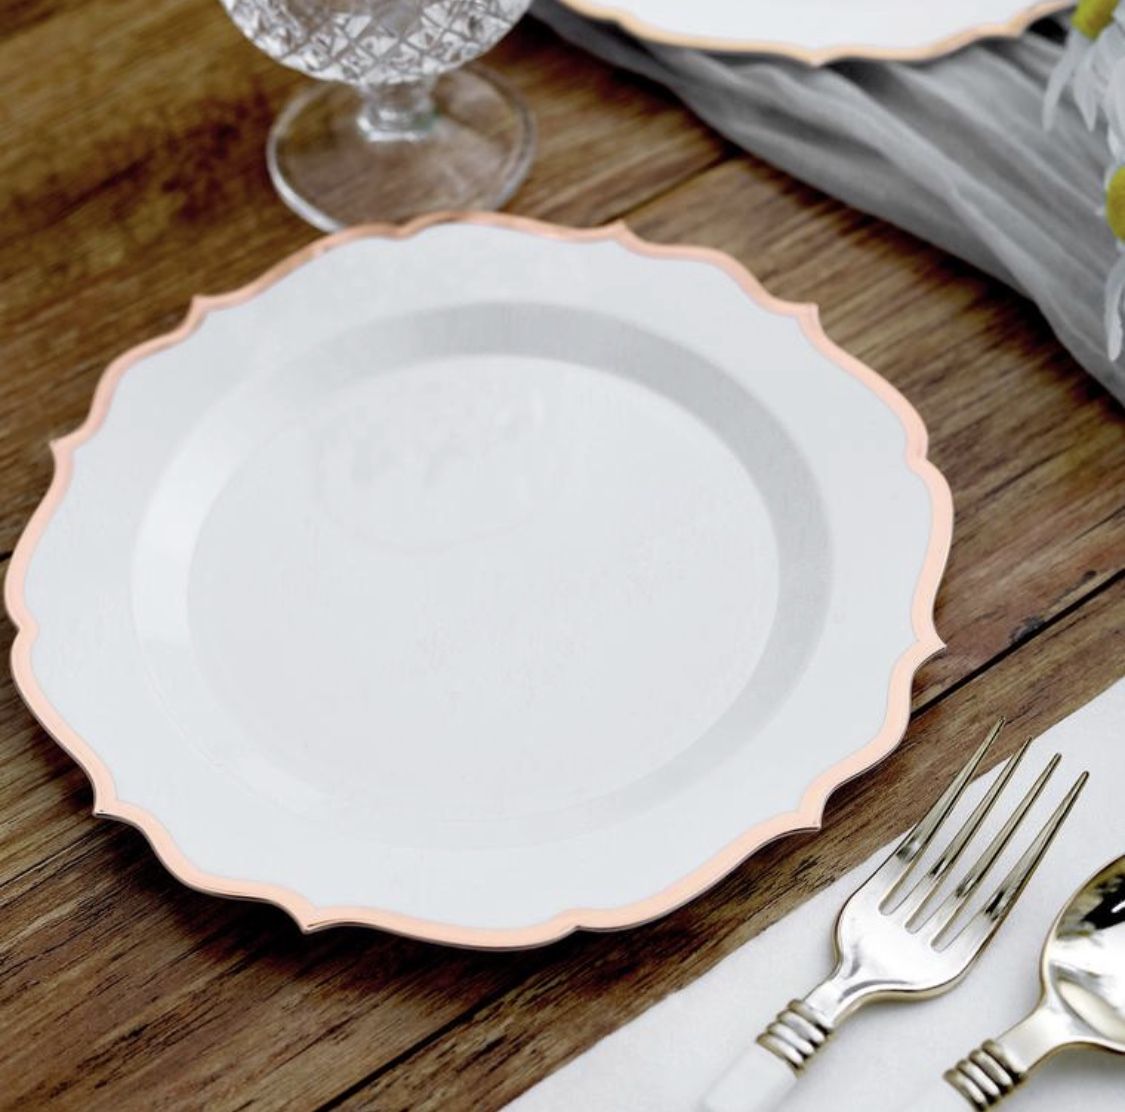 100 | 8" Heavy Duty Disposable Plates, Plastic Salad Dessert Plates With Rose Gold/Blush Scalloped Rim